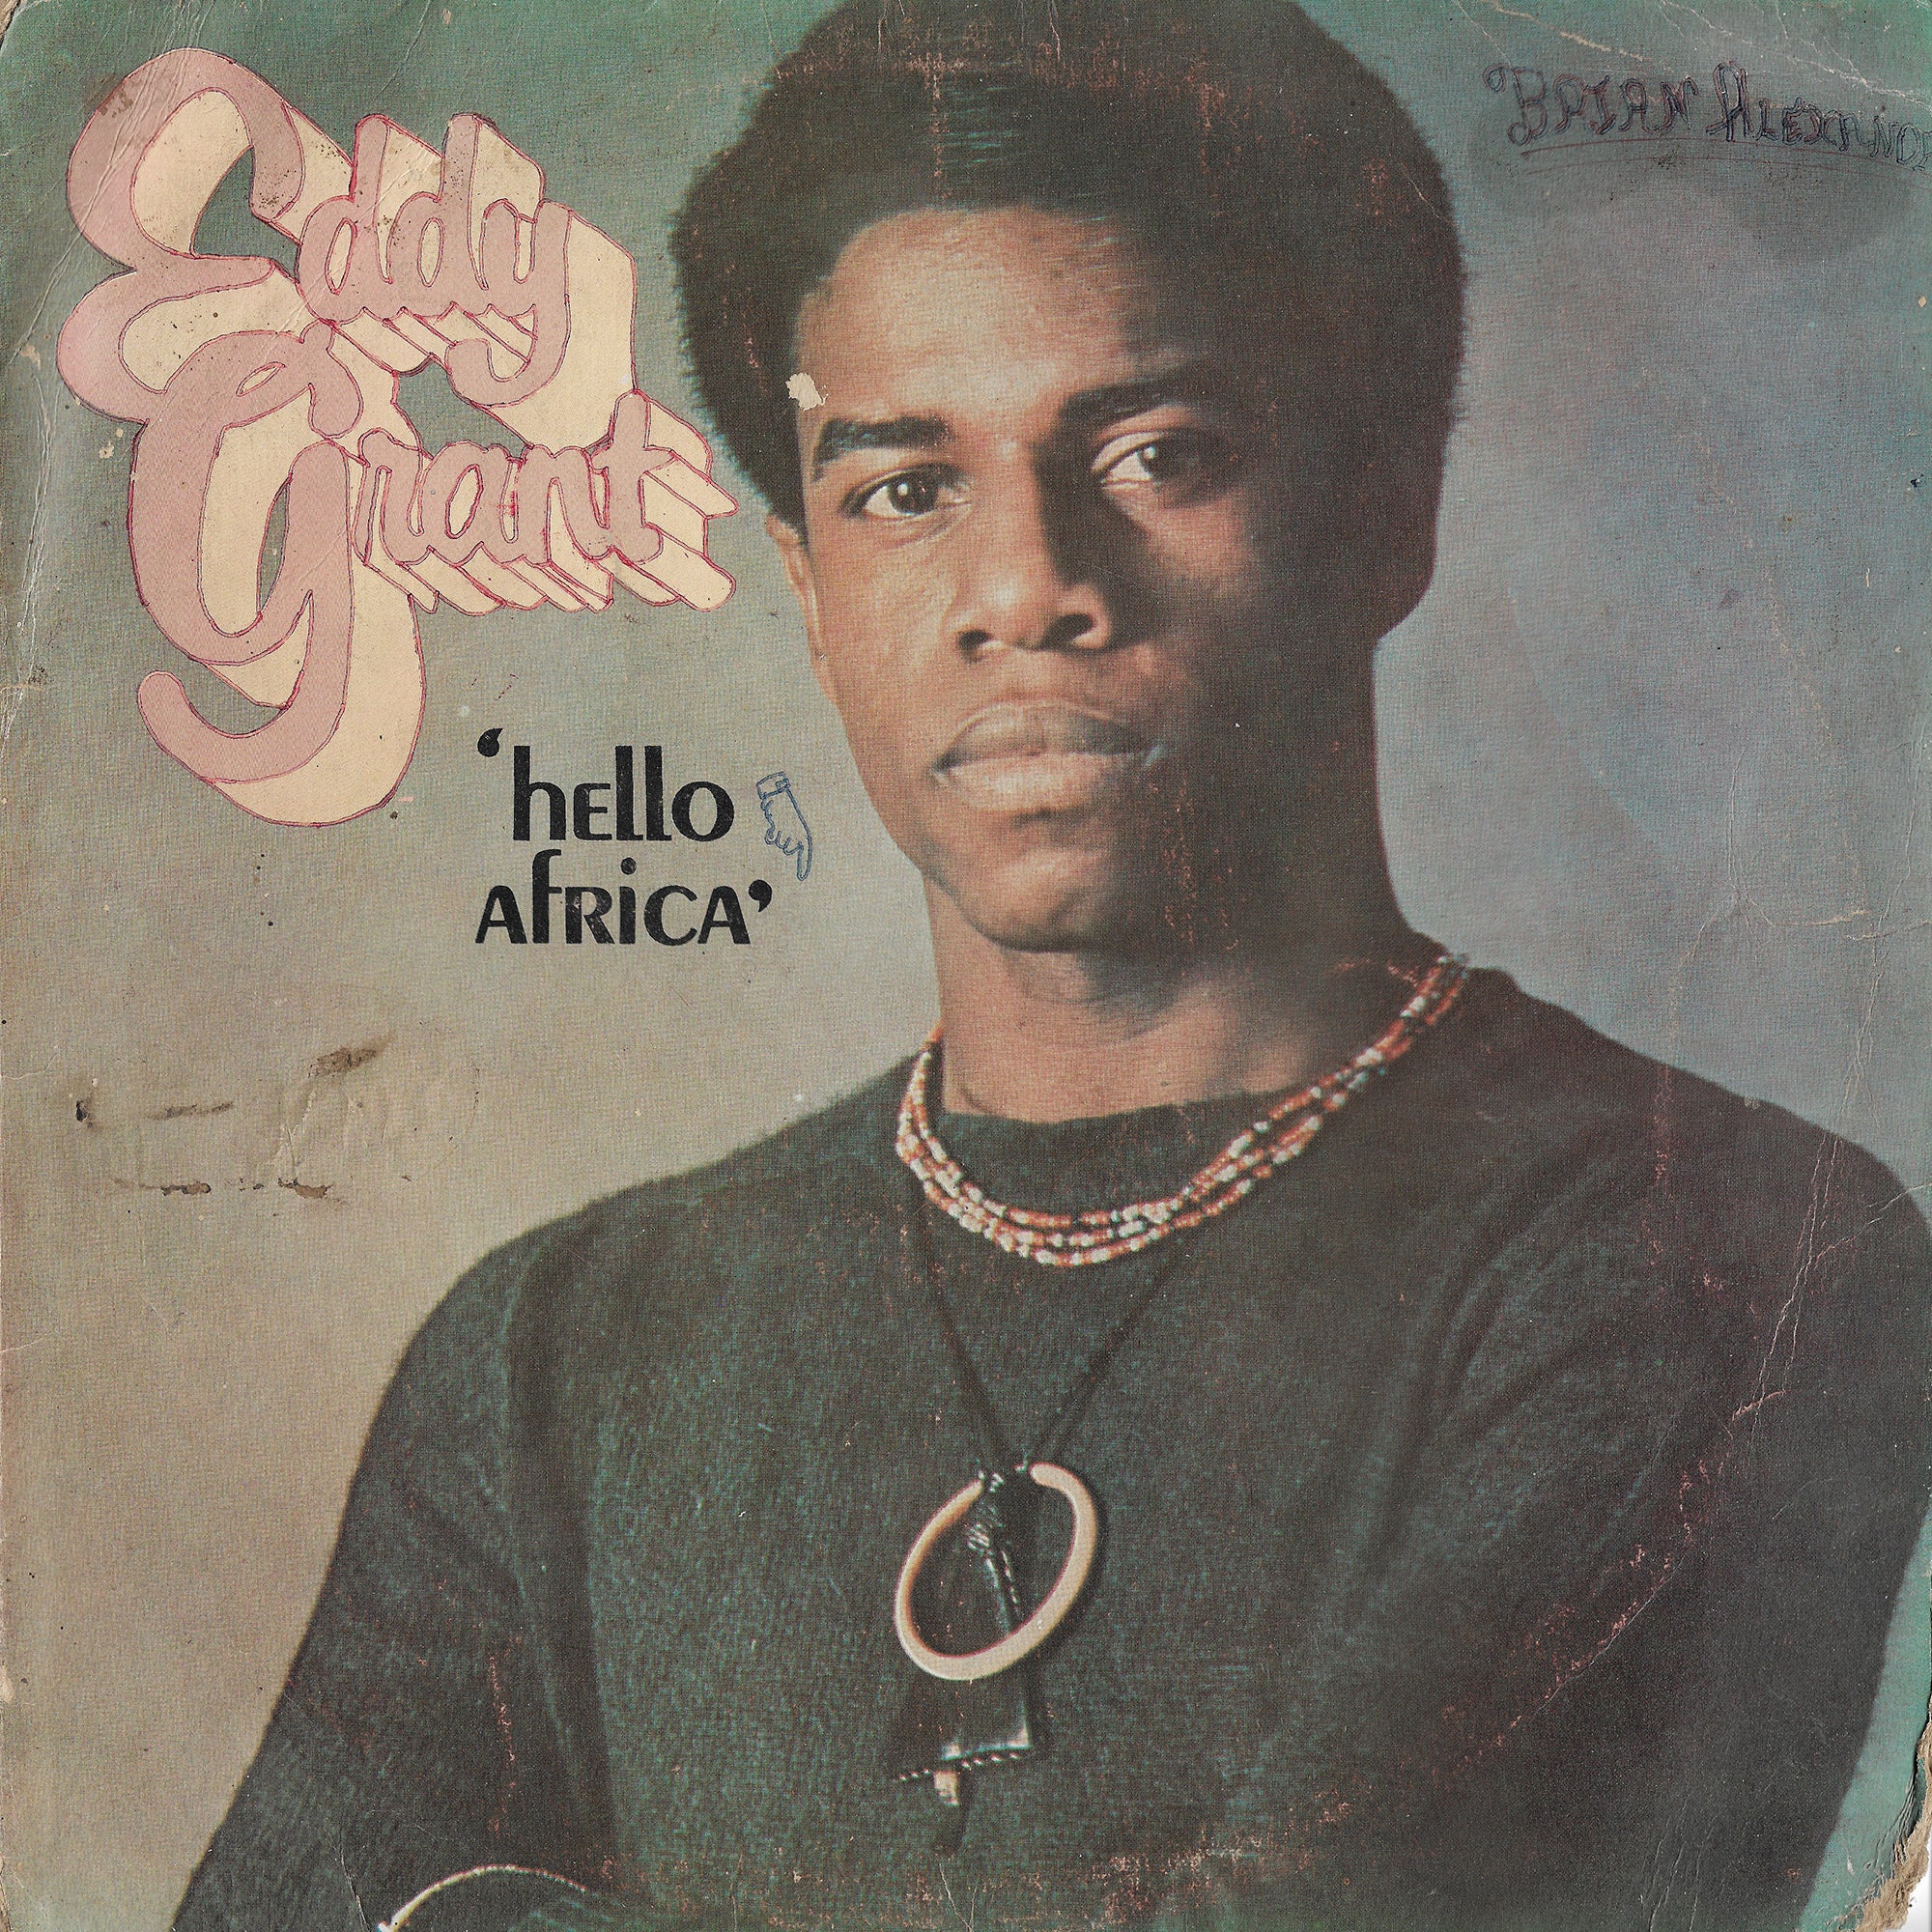 Eddy Grant - Hello Africa